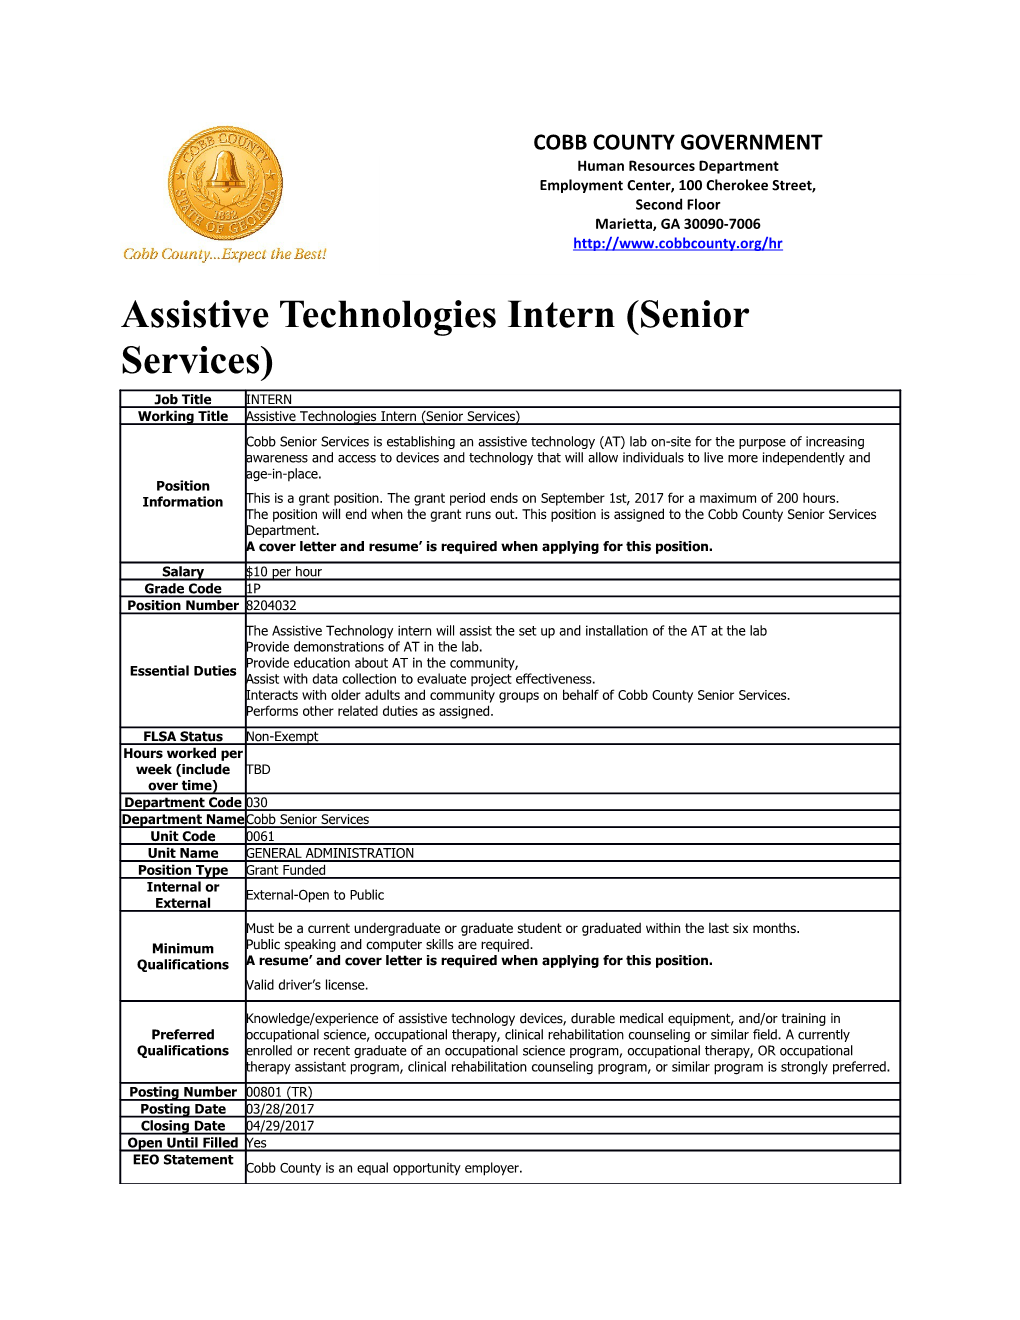 Assistive Technologies Intern (Senior Services)